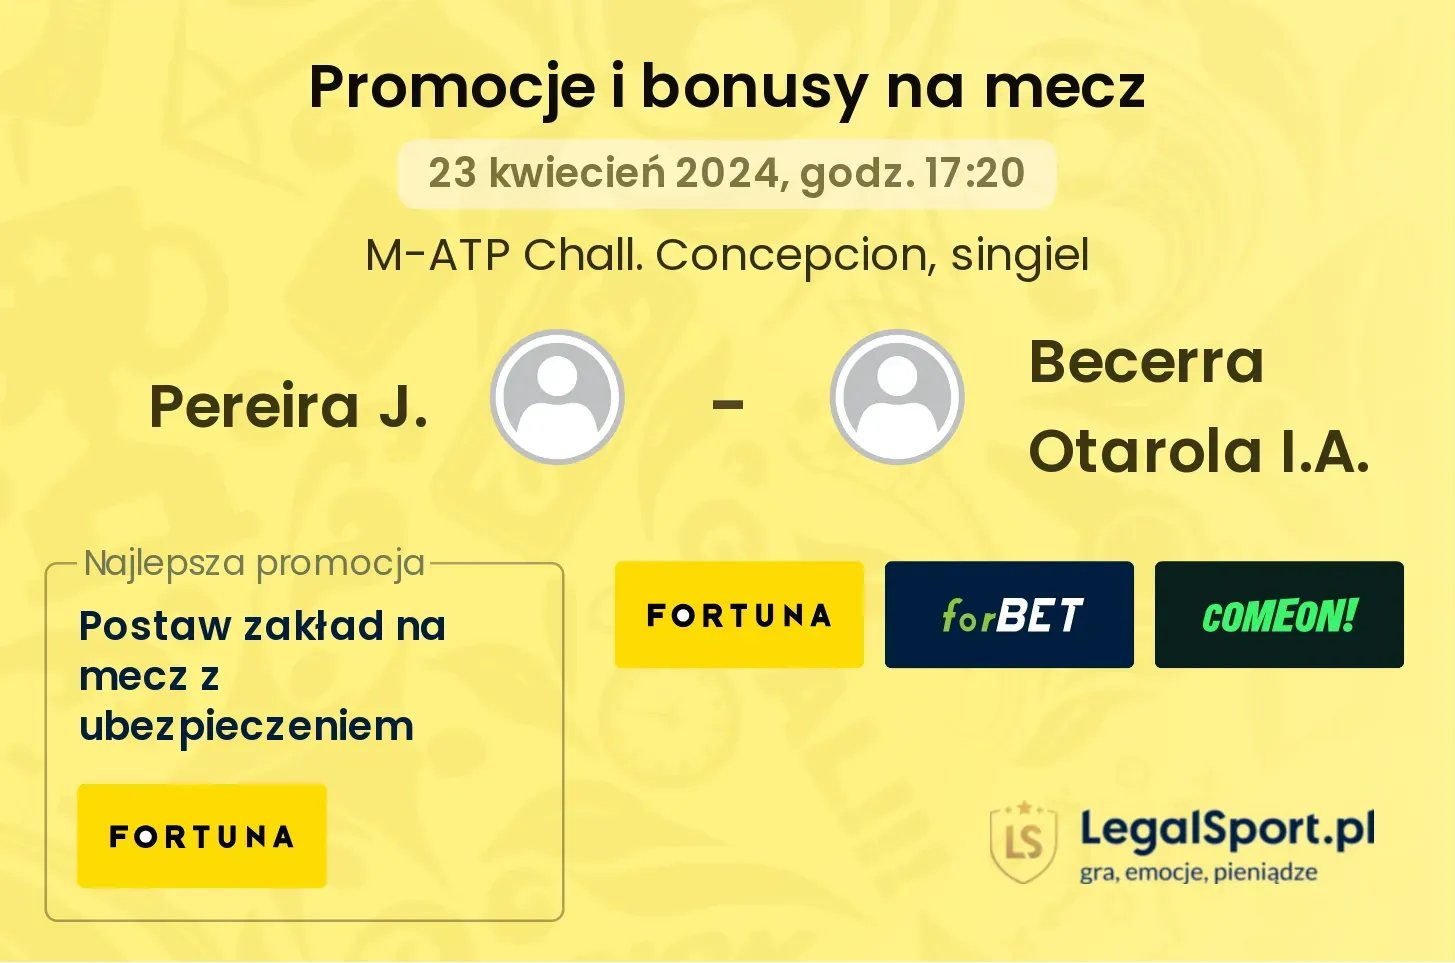 Pereira J. - Becerra Otarola I.A. promocje bonusy na mecz